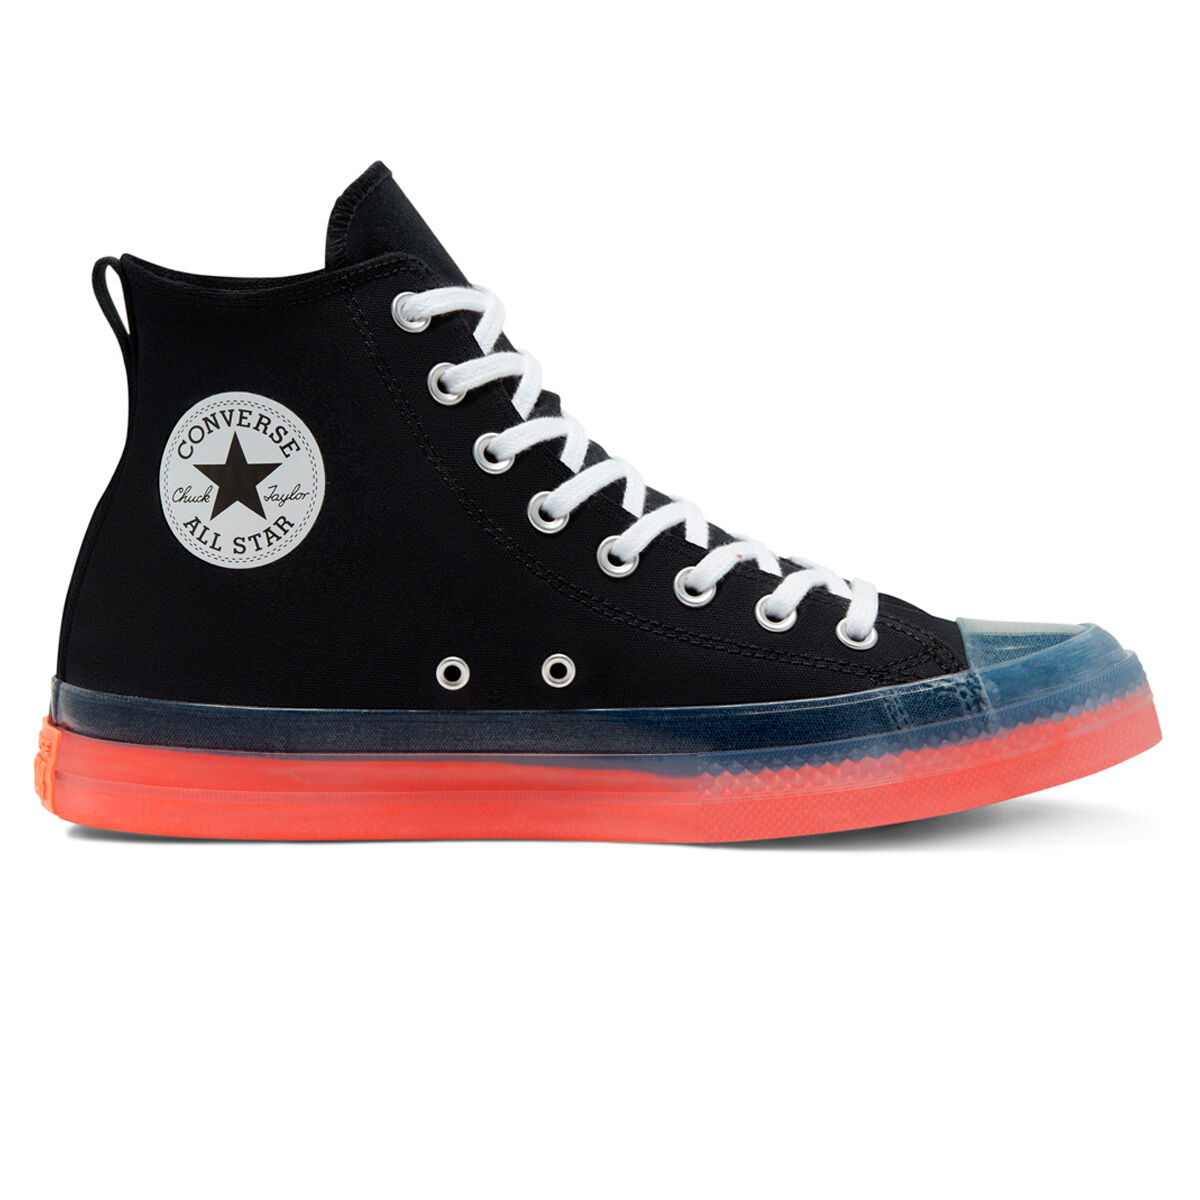 rebel sport converse shoes